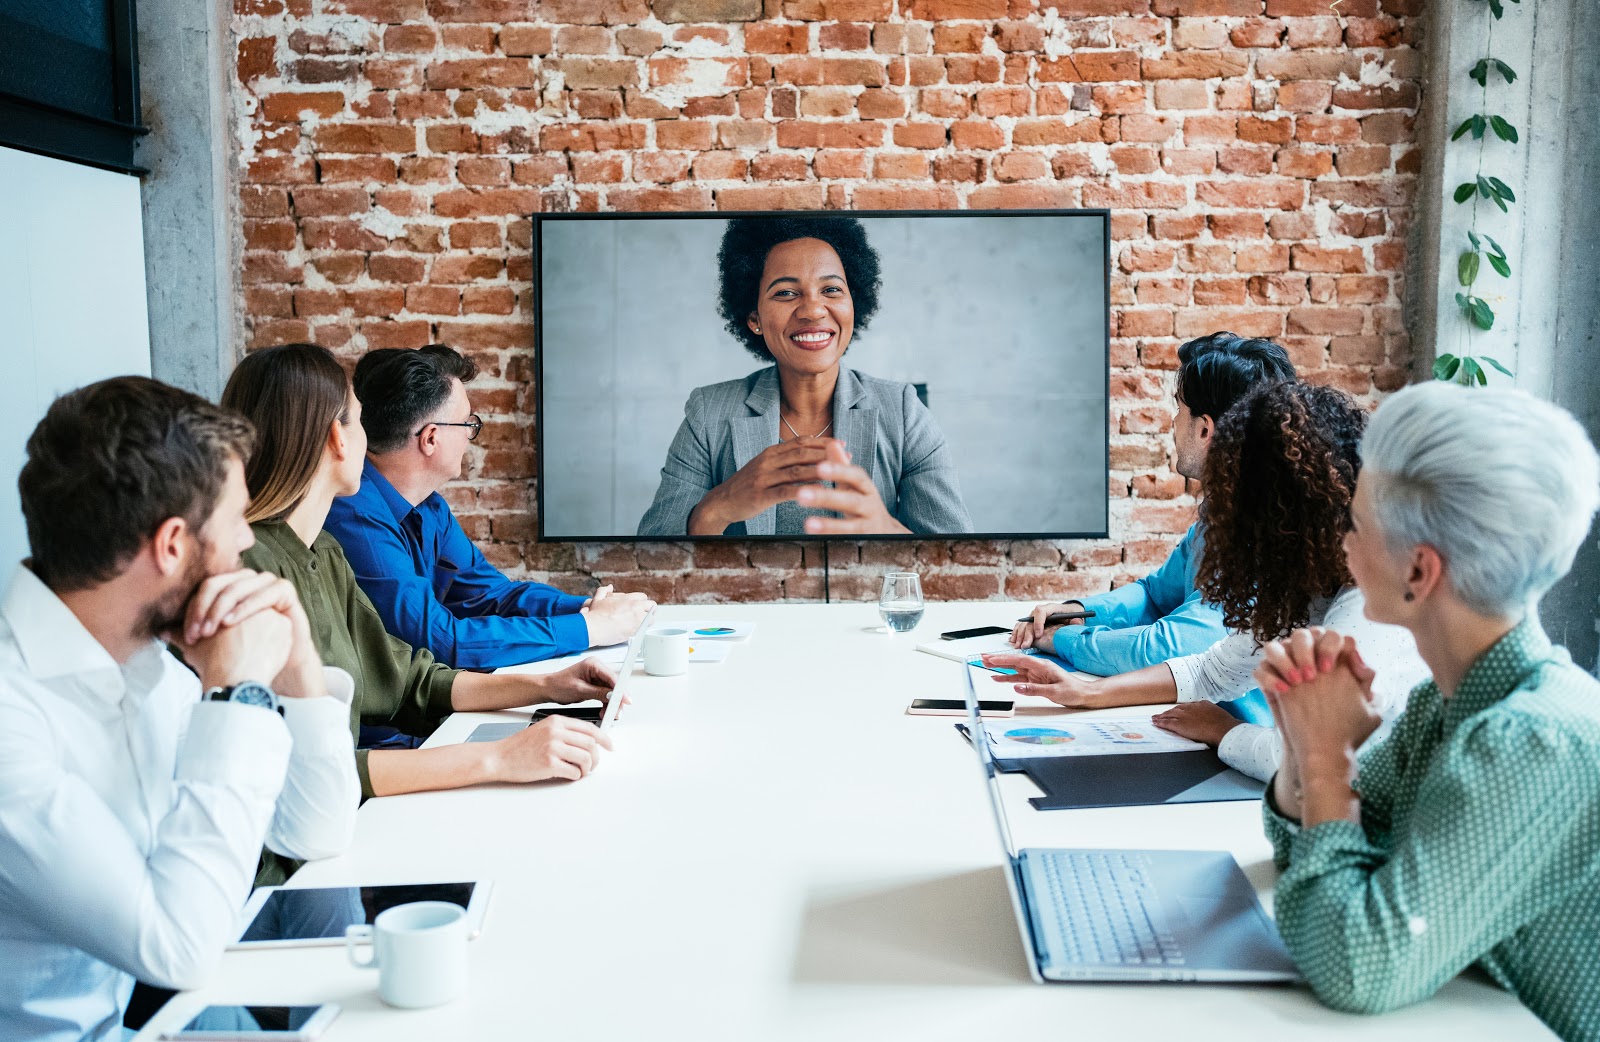 vymeet视频会议积极创新更高效的线上会议模式 第1张